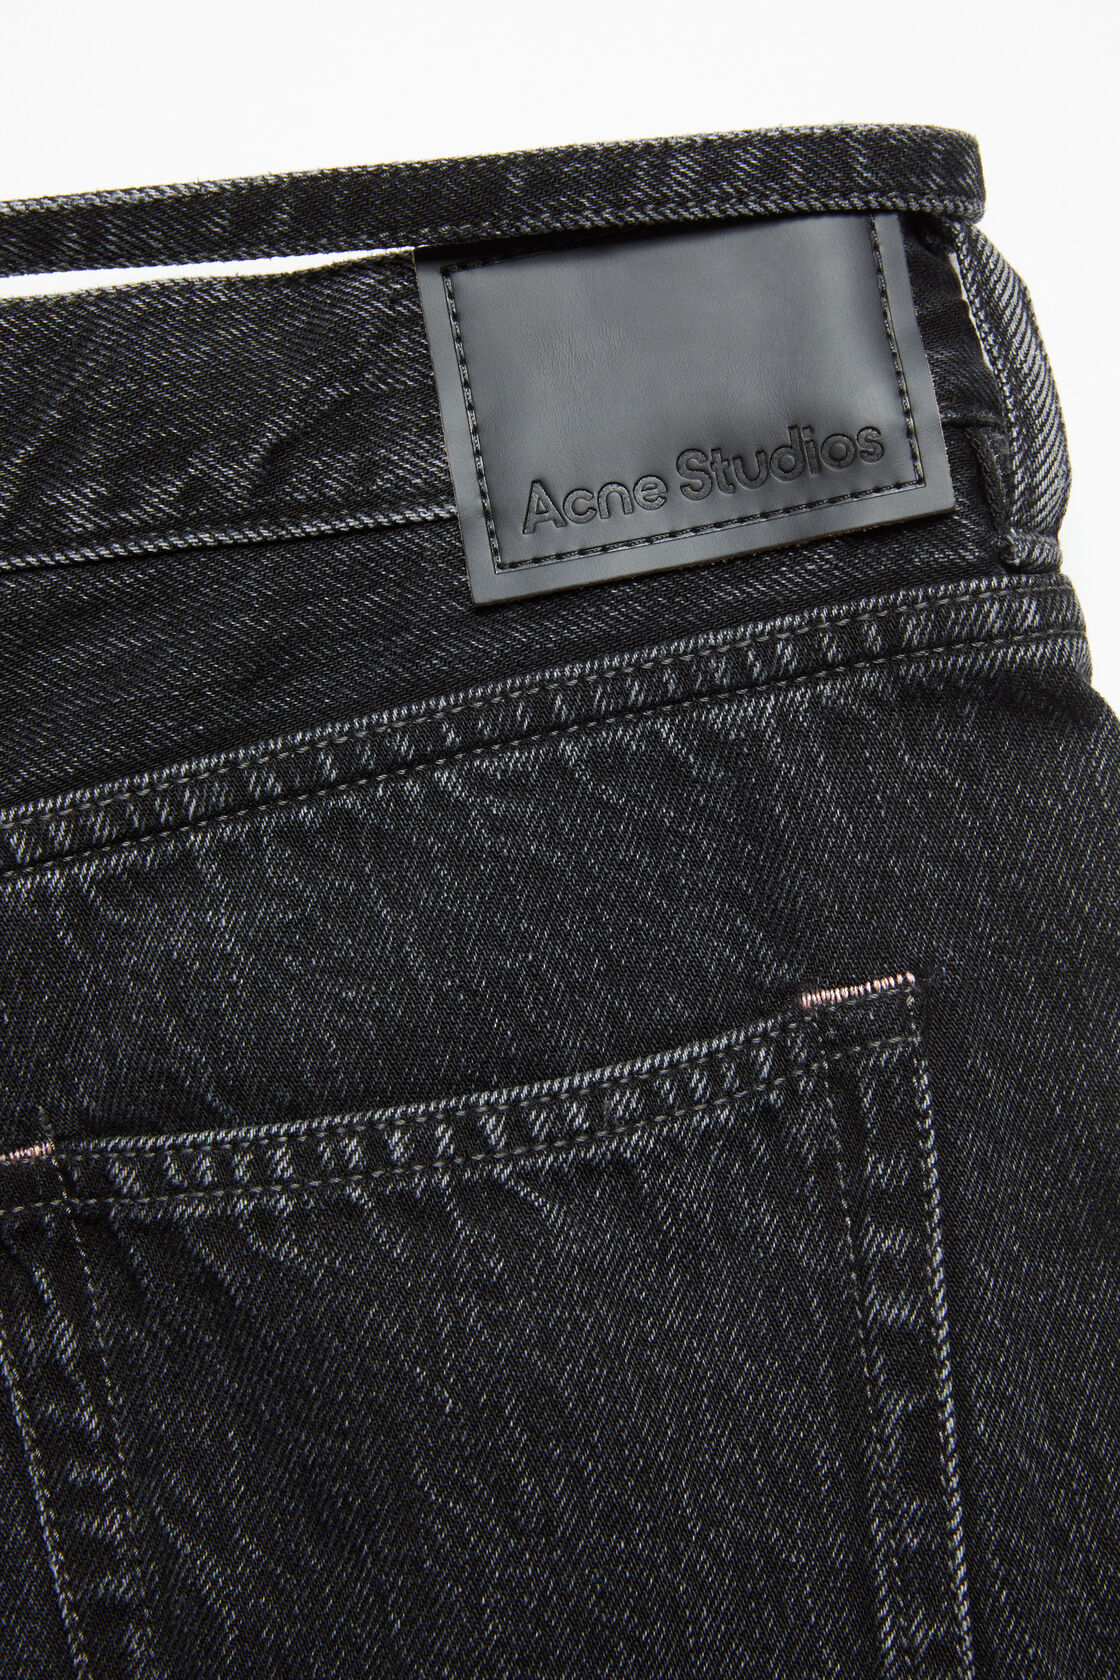 Acne Studios - Regular fit jeans - 2004 - Black